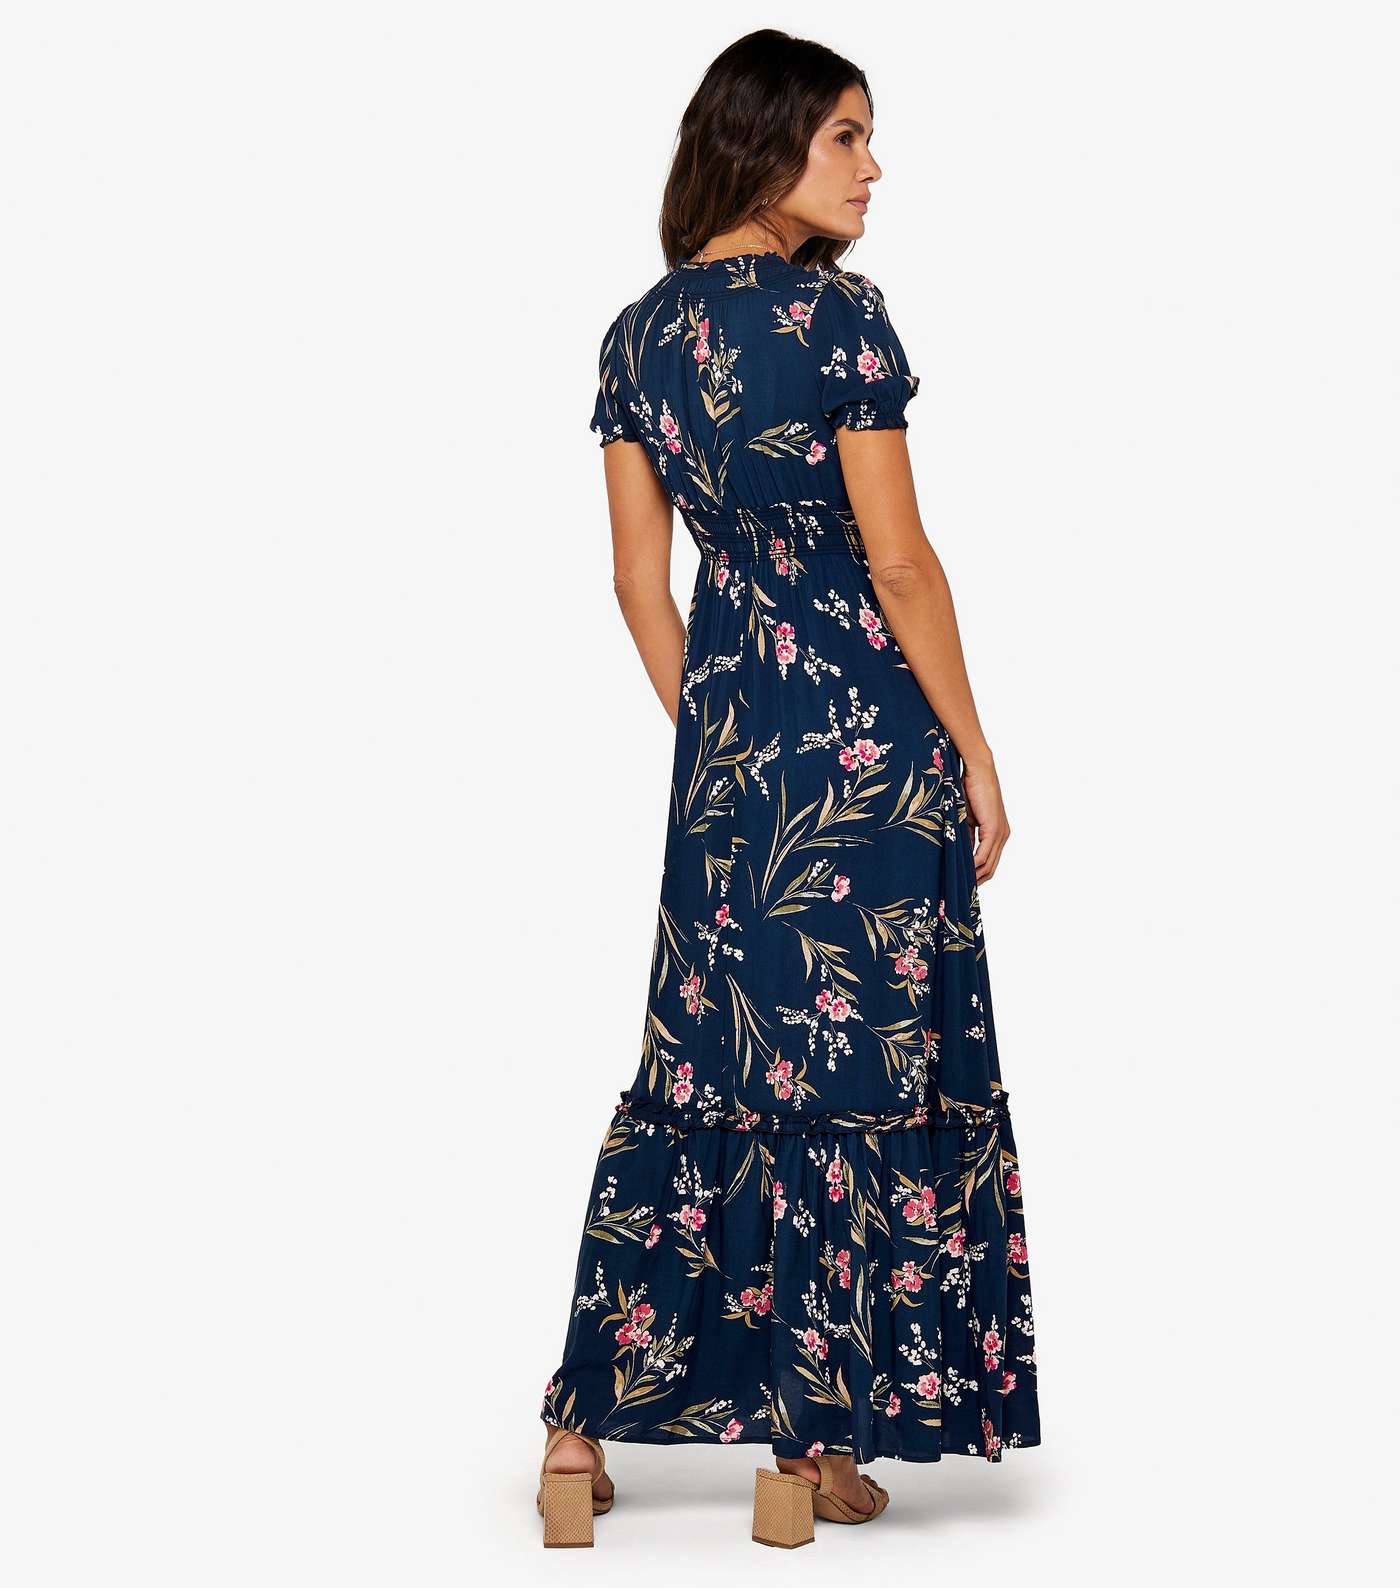 Apricot Navy Floral Print Maxi Dress Image 3